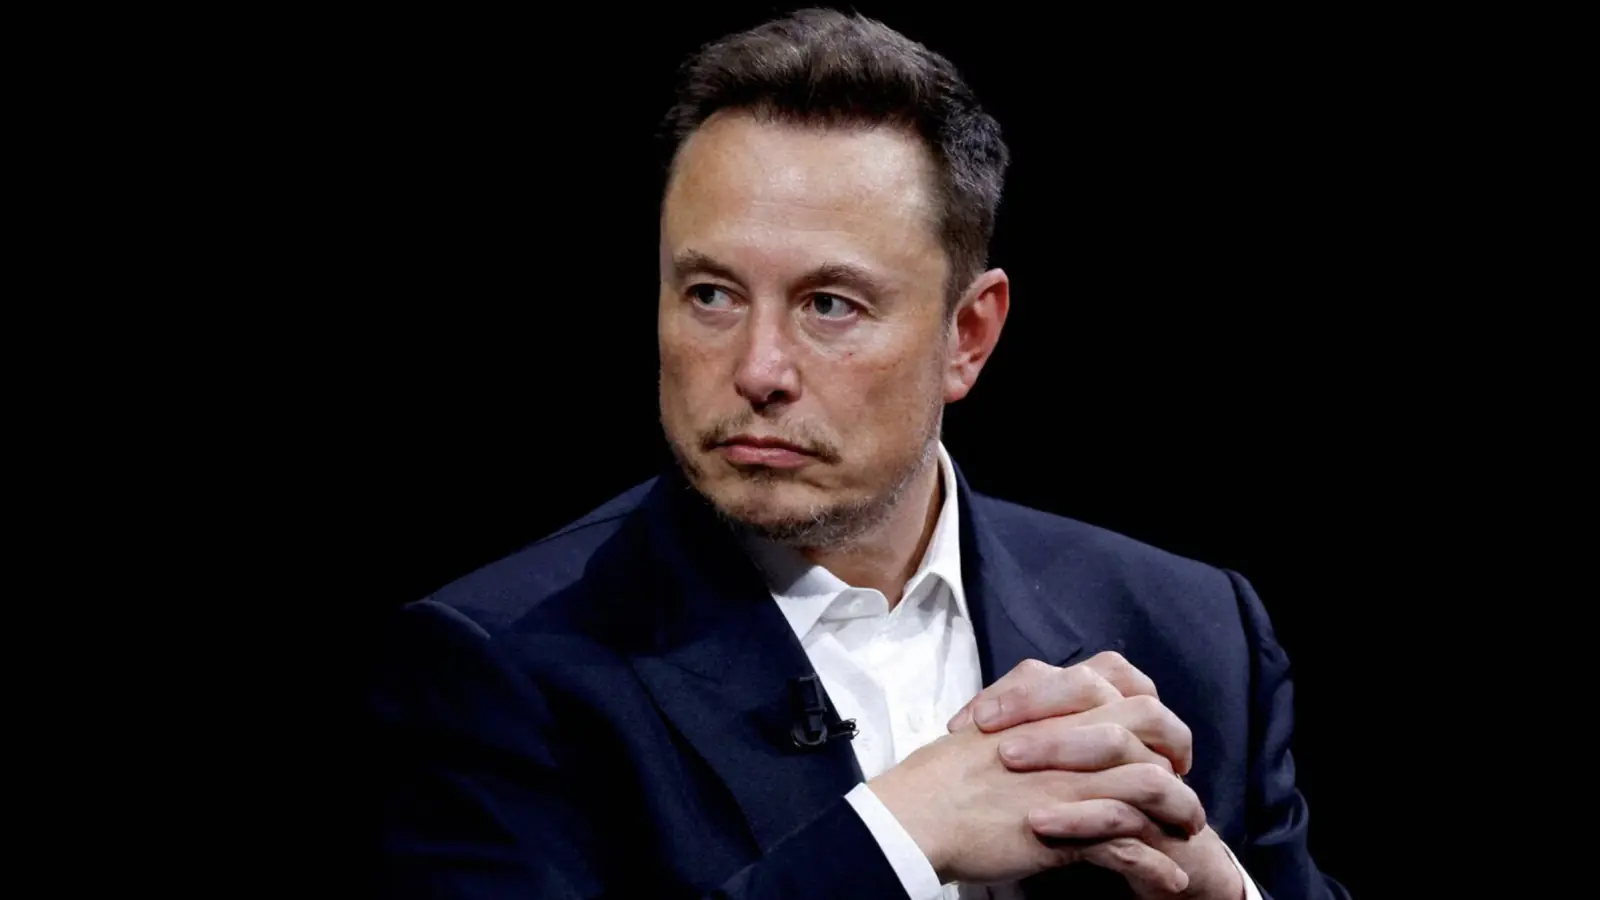 Tesla shareholder group targets Elon Musk, opposes paying $56 billion salary